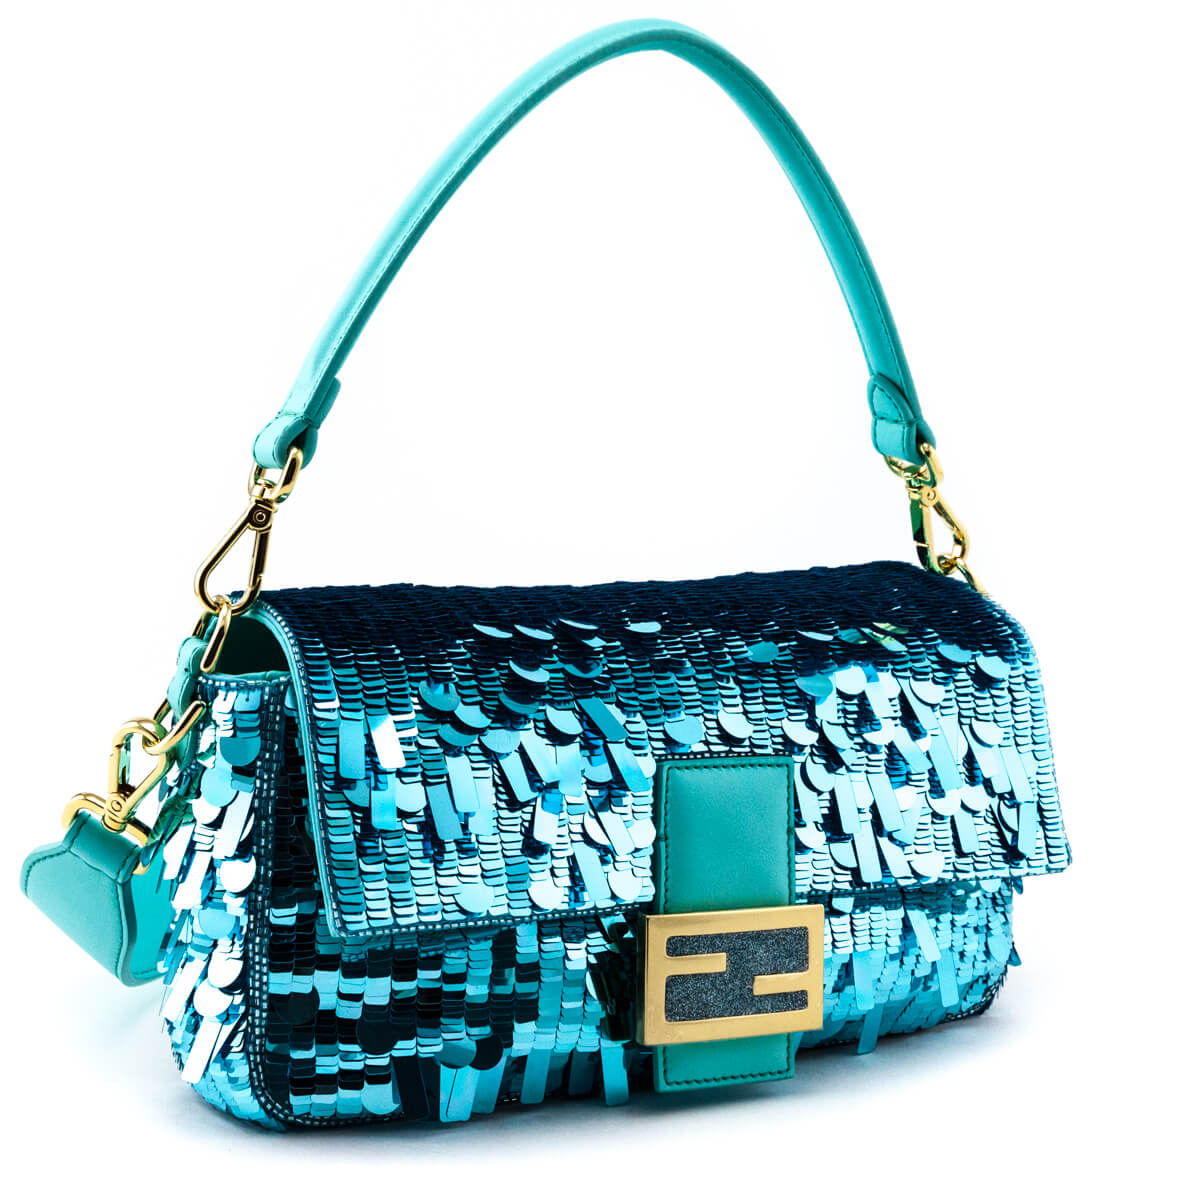 Fendi - Preloved Designer Handbags and Clothing - Love that Bag 